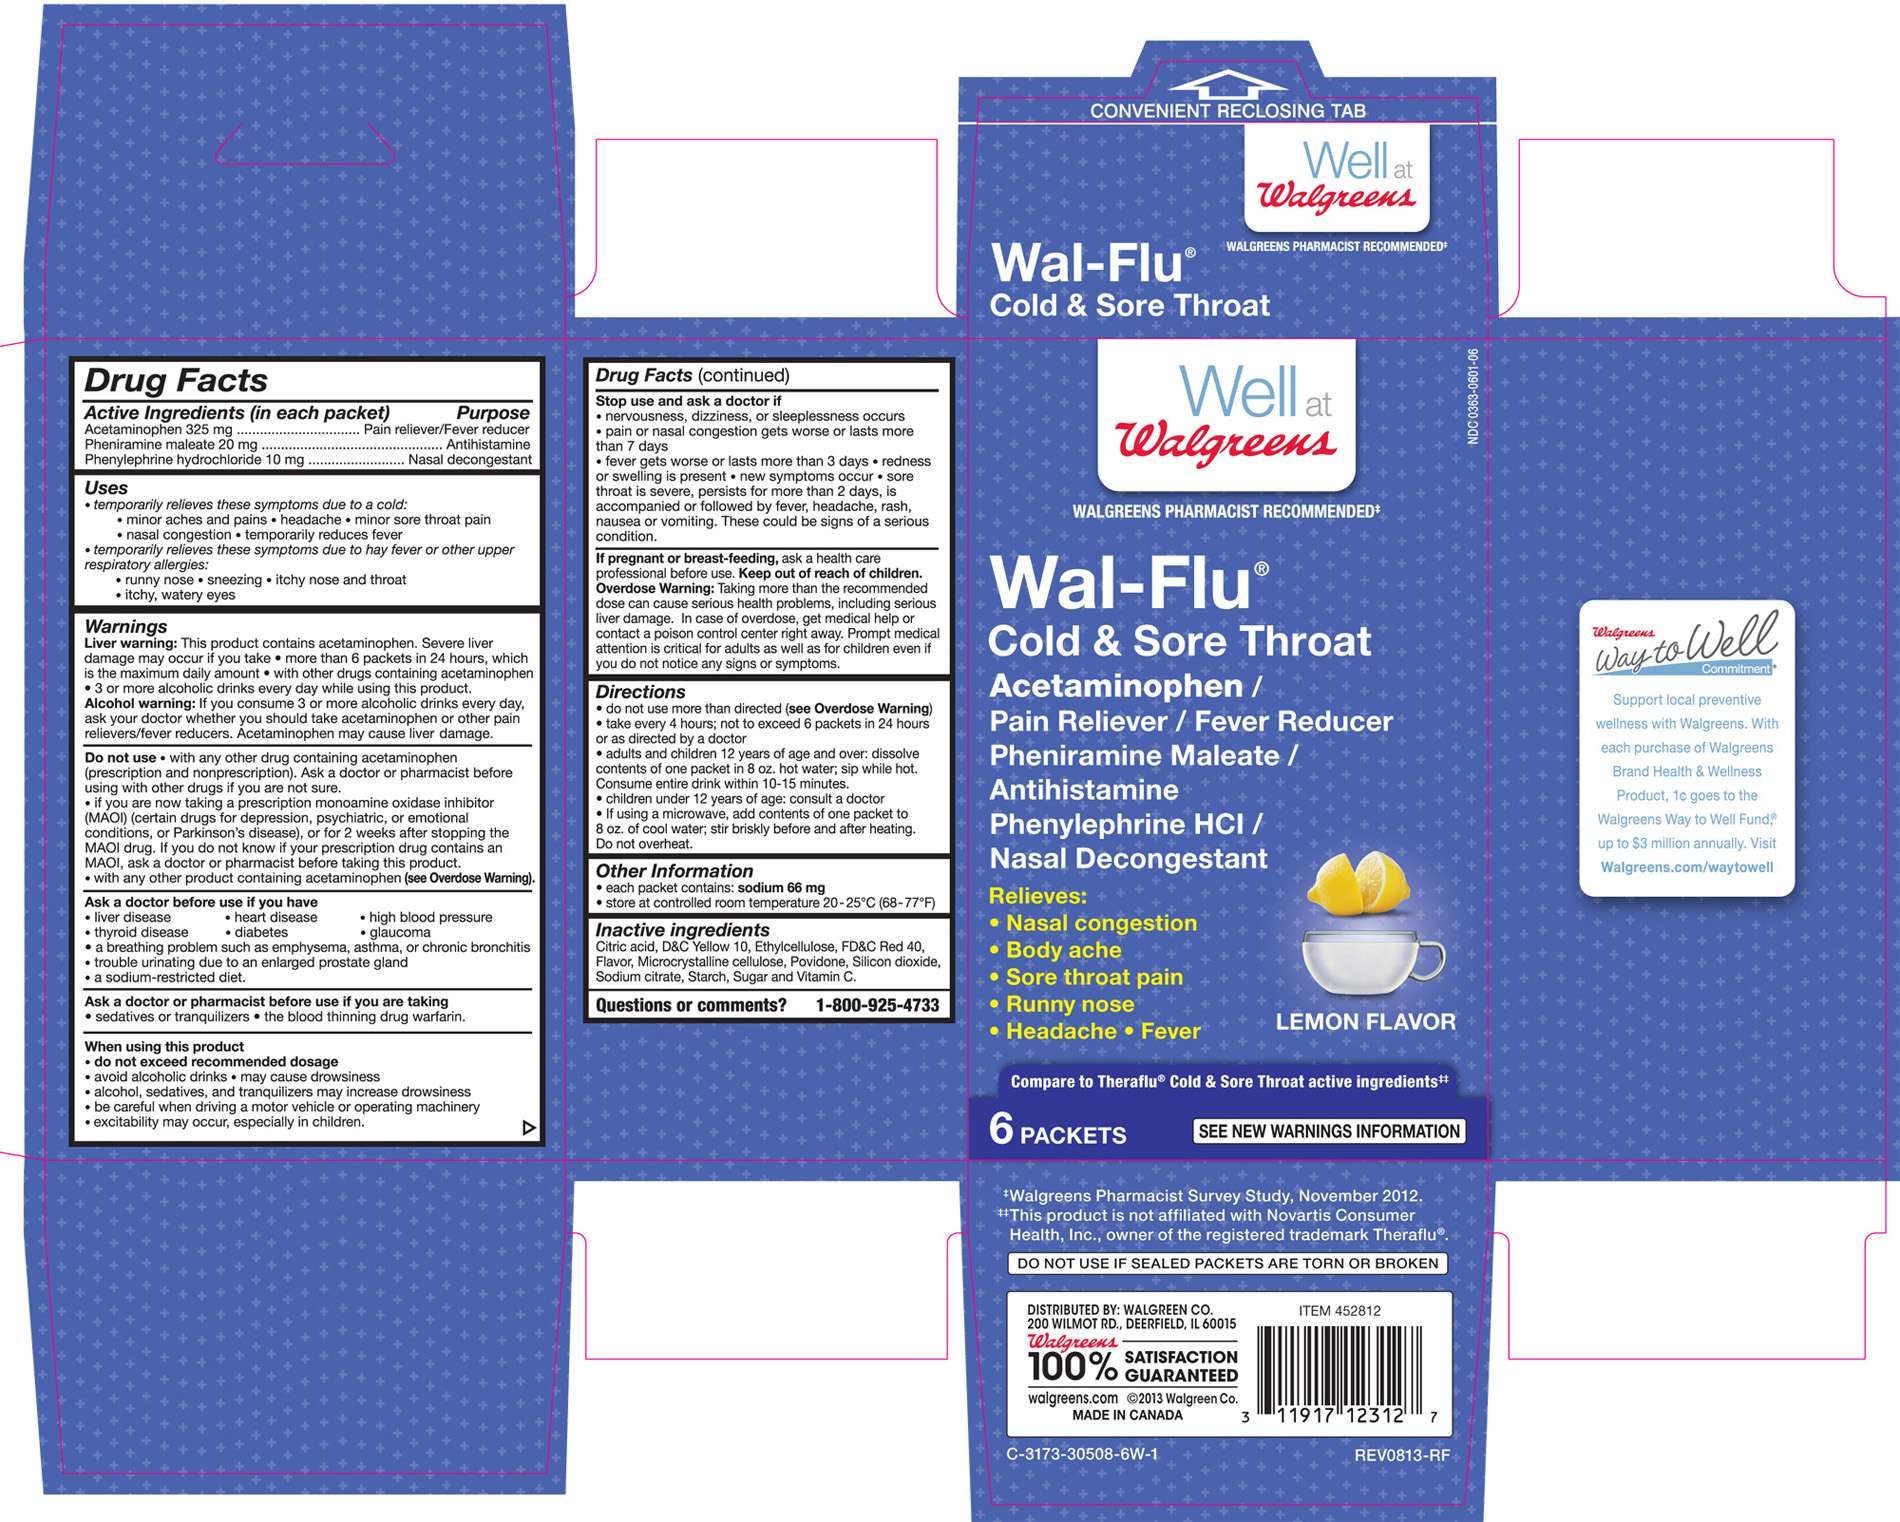 Walgreens Wal-Flu Cold and Sore Throat